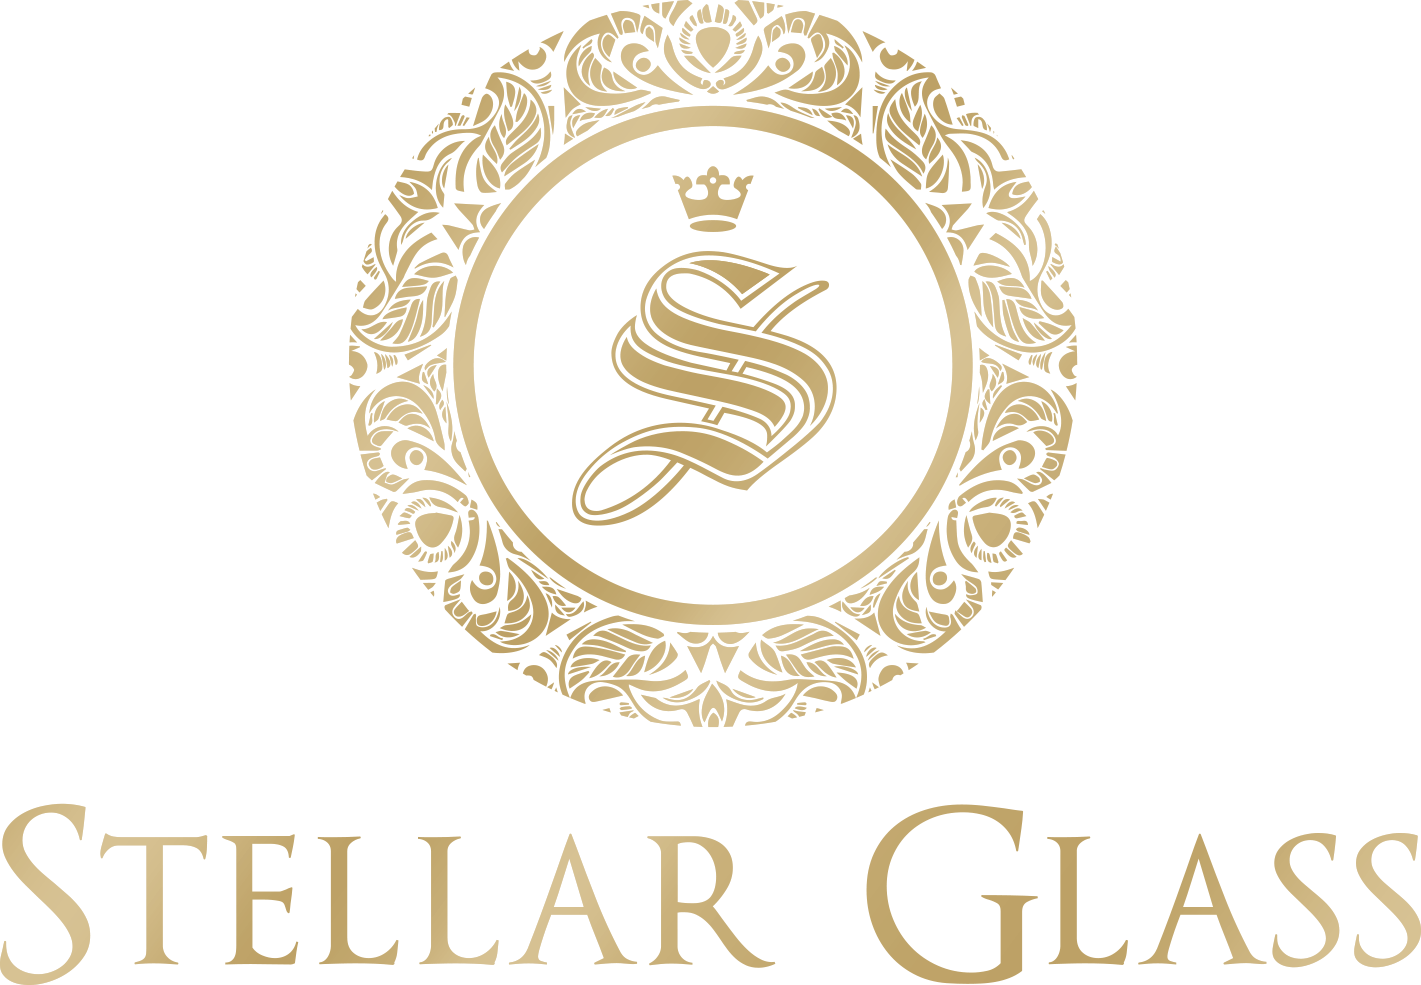 STELLAR GLASS